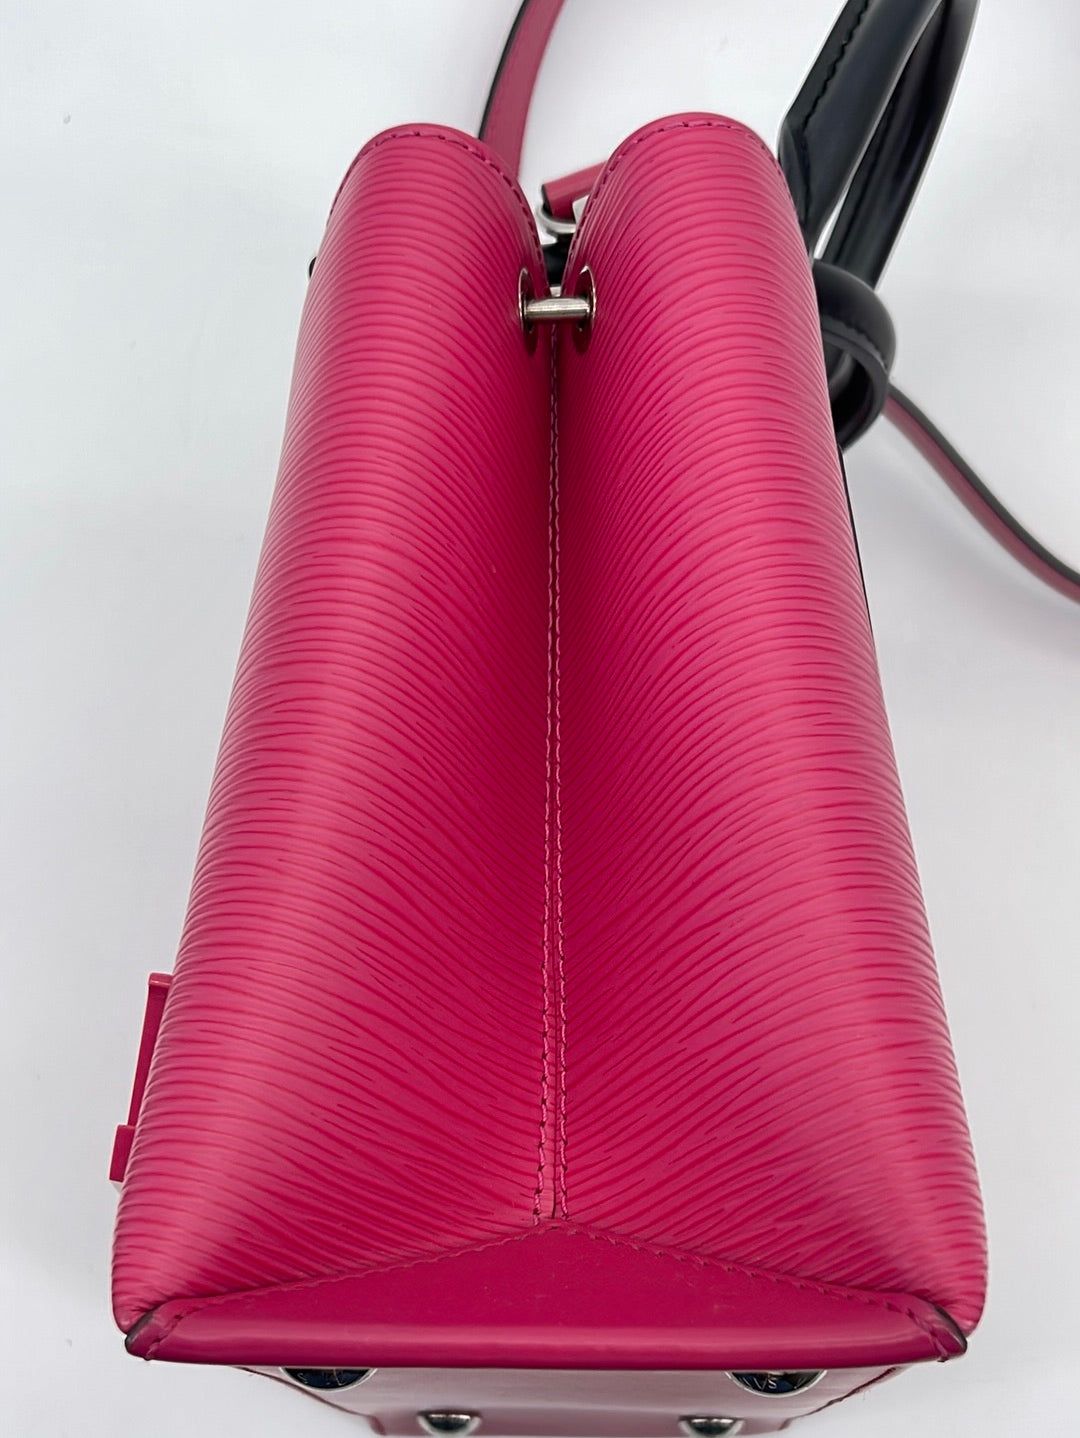 LOUIS VUITTON Handbag M51333 Kleber PM 2WAY Epi Leather Red Red Women –